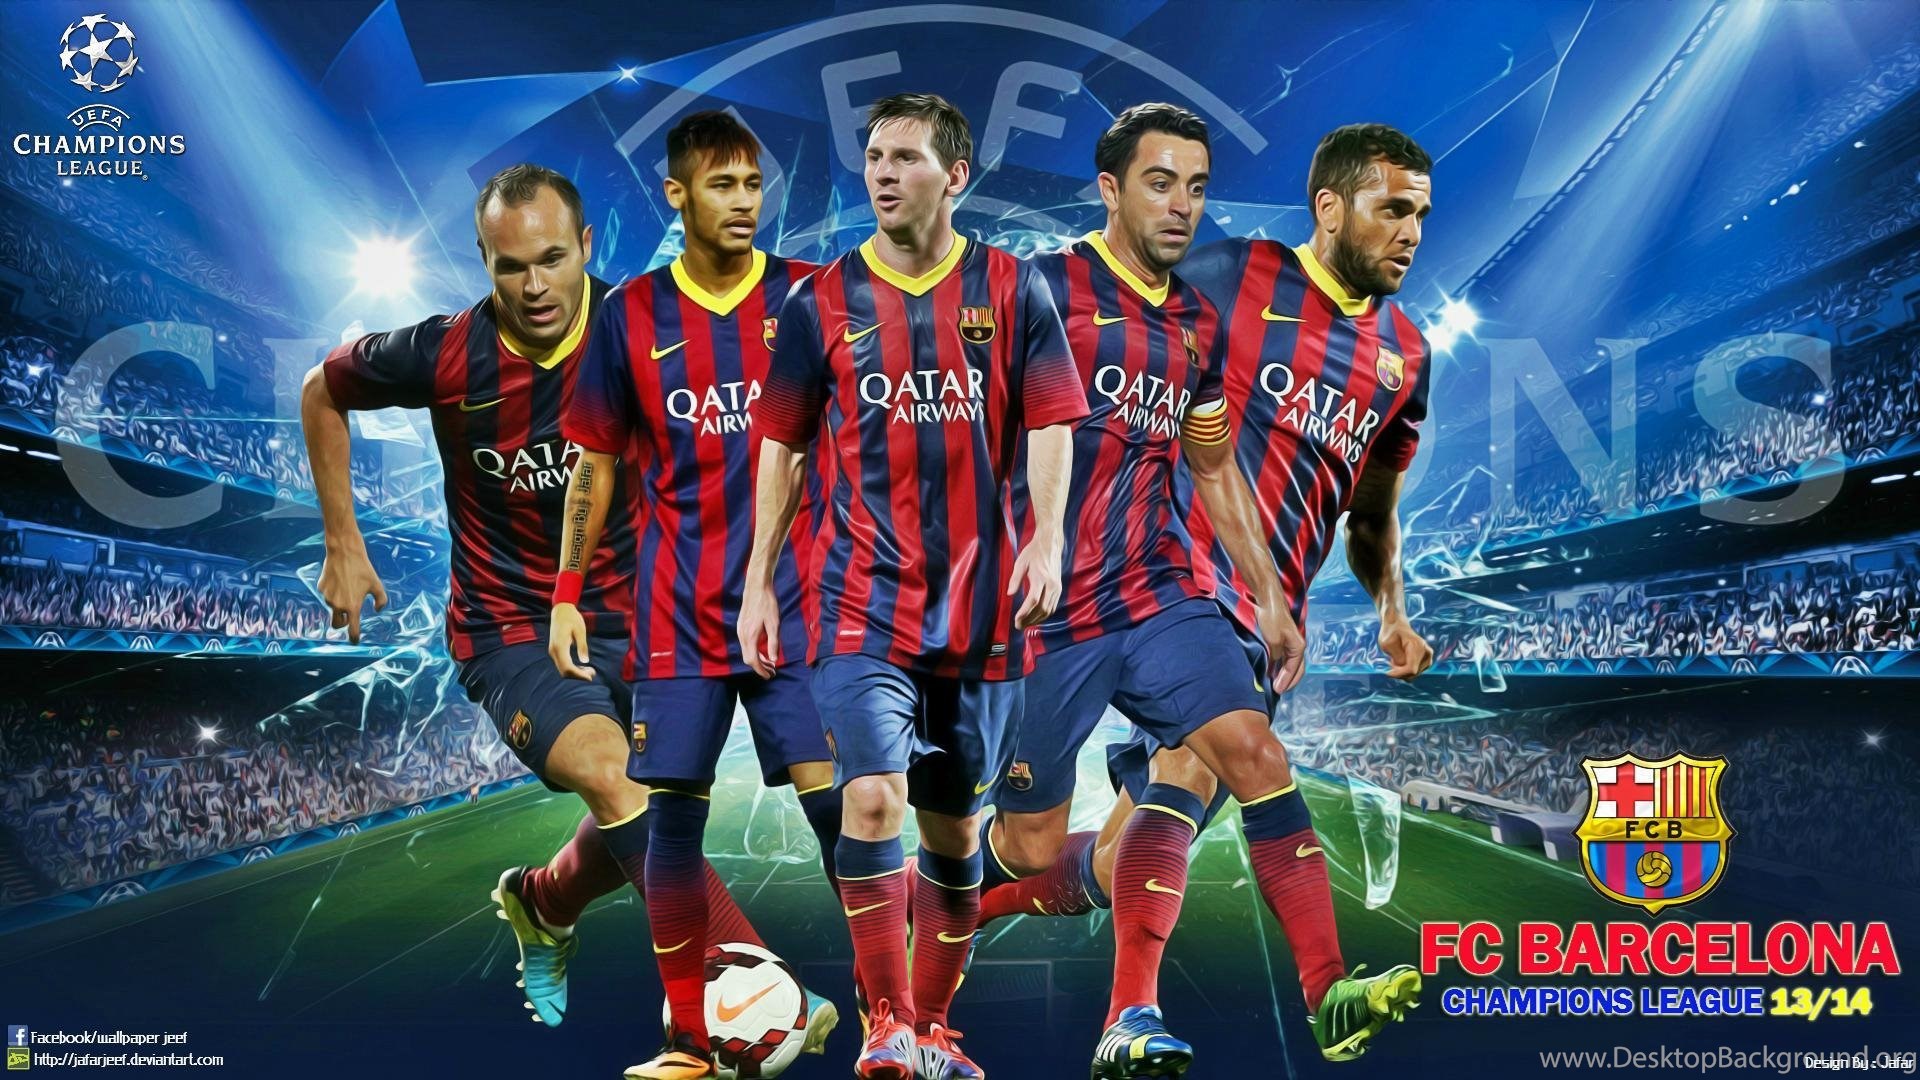 Fc Barcelona Champions League Wallpaper 2013 2014 Desktop Background